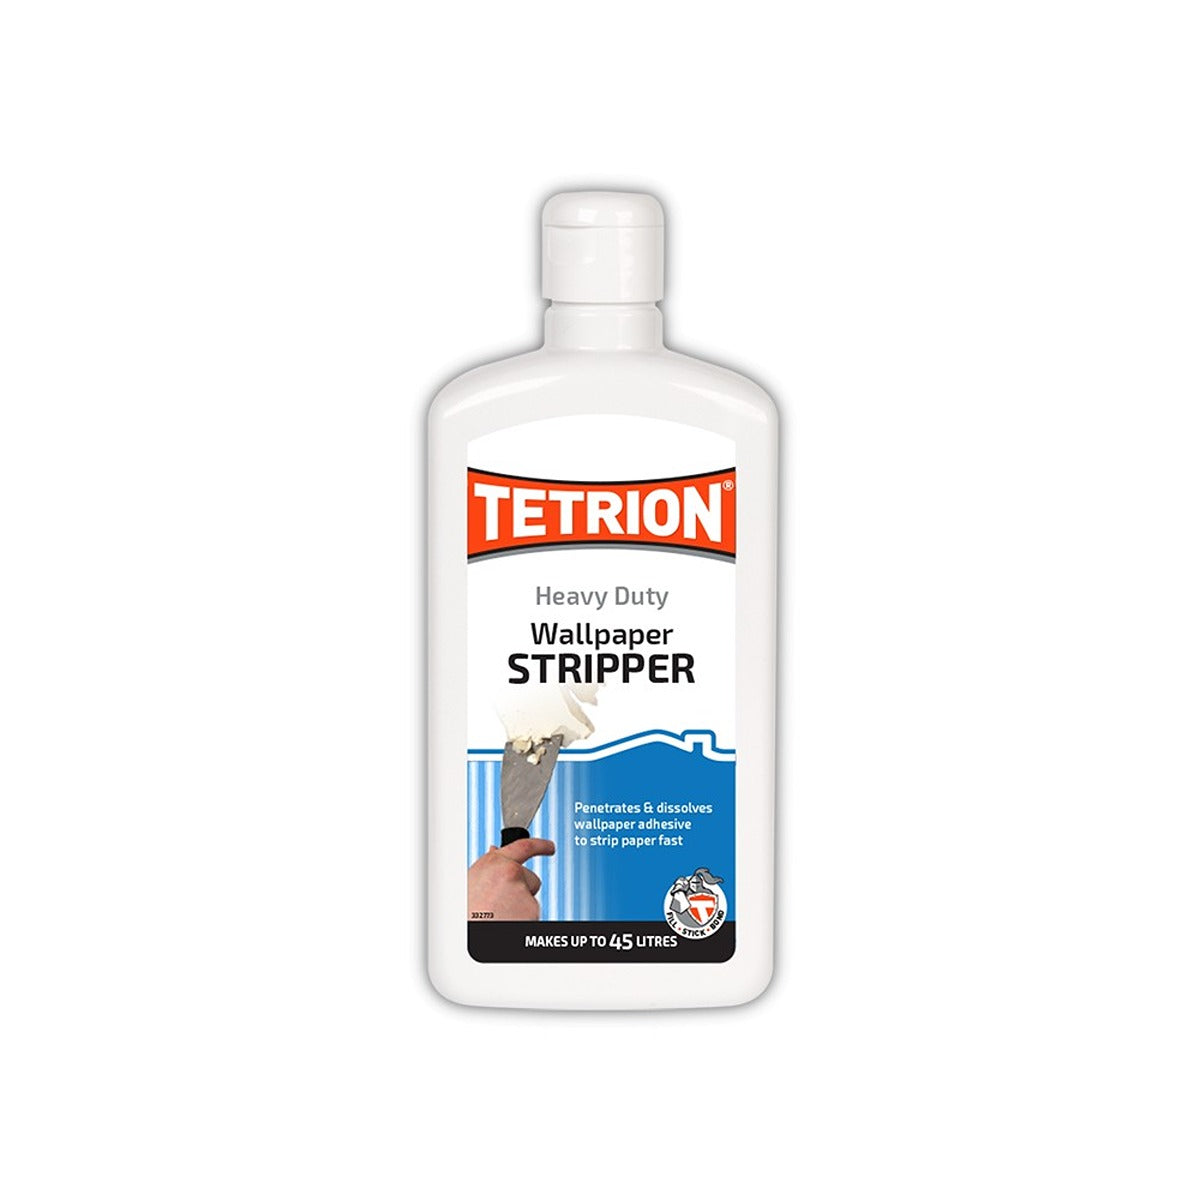 A bottle of Tetrion - Wallpaper Stripper - 1pcs on a white background.